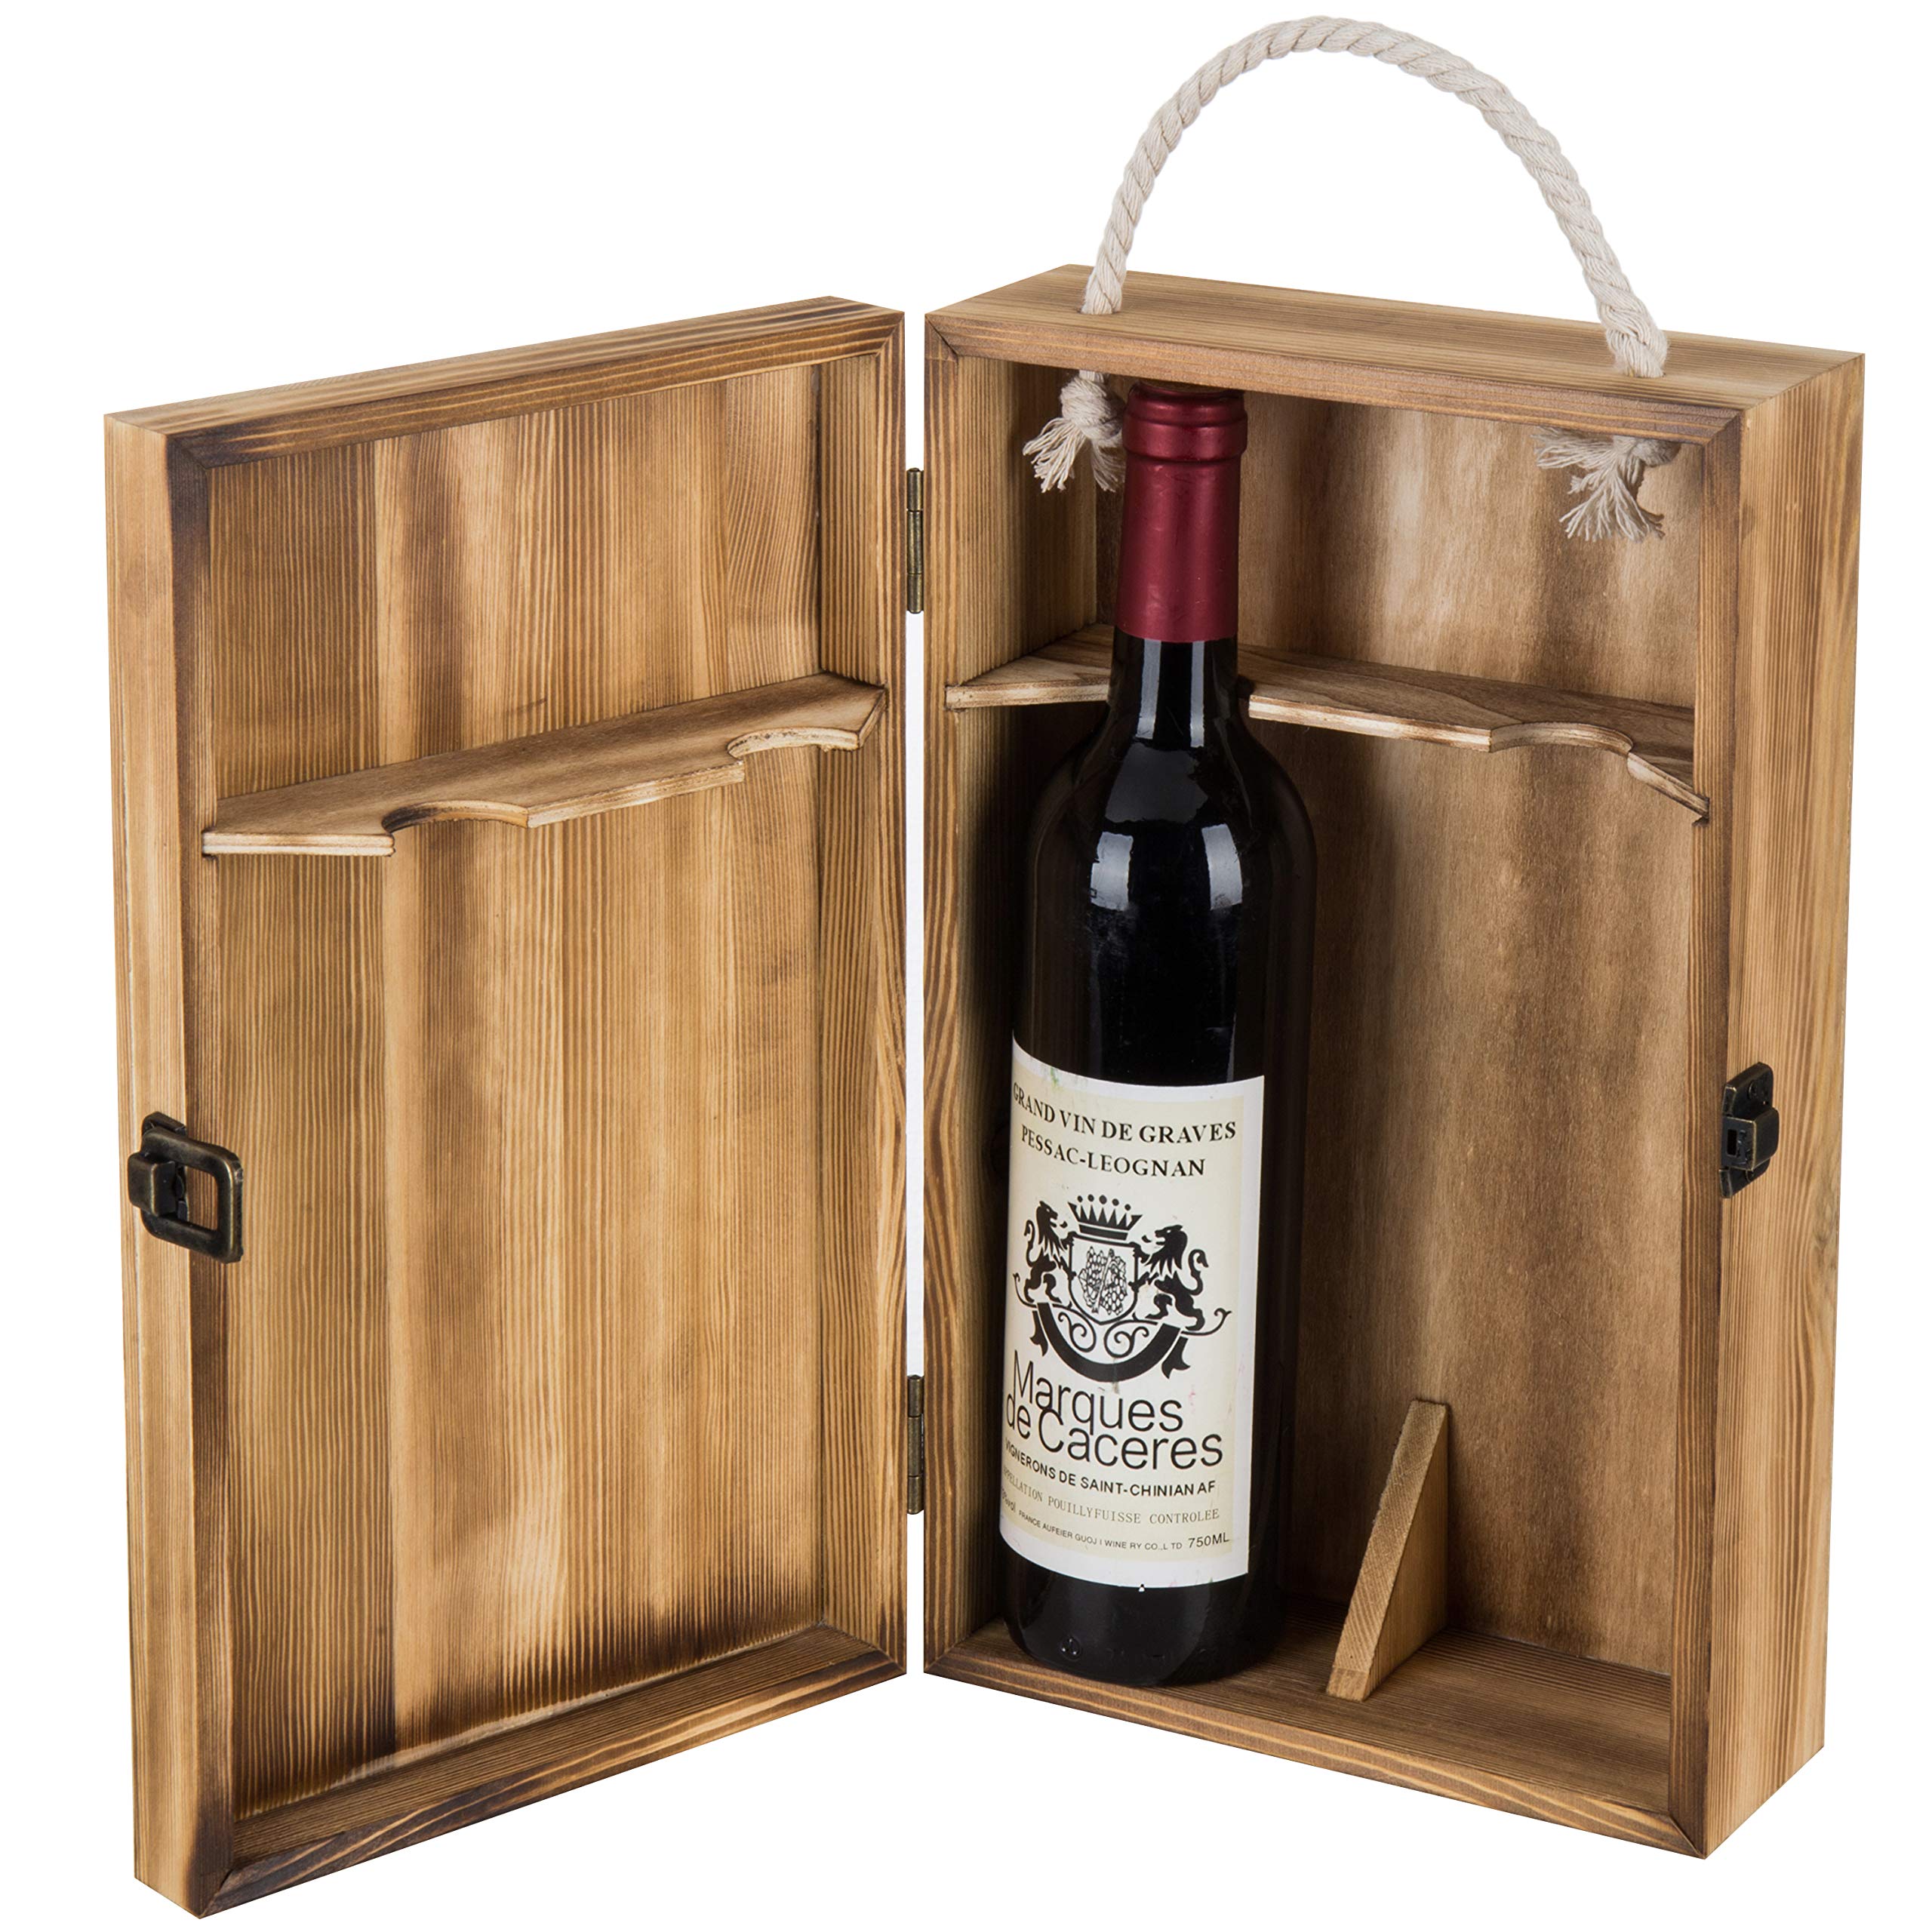 MyGift Wine Gift Boxes